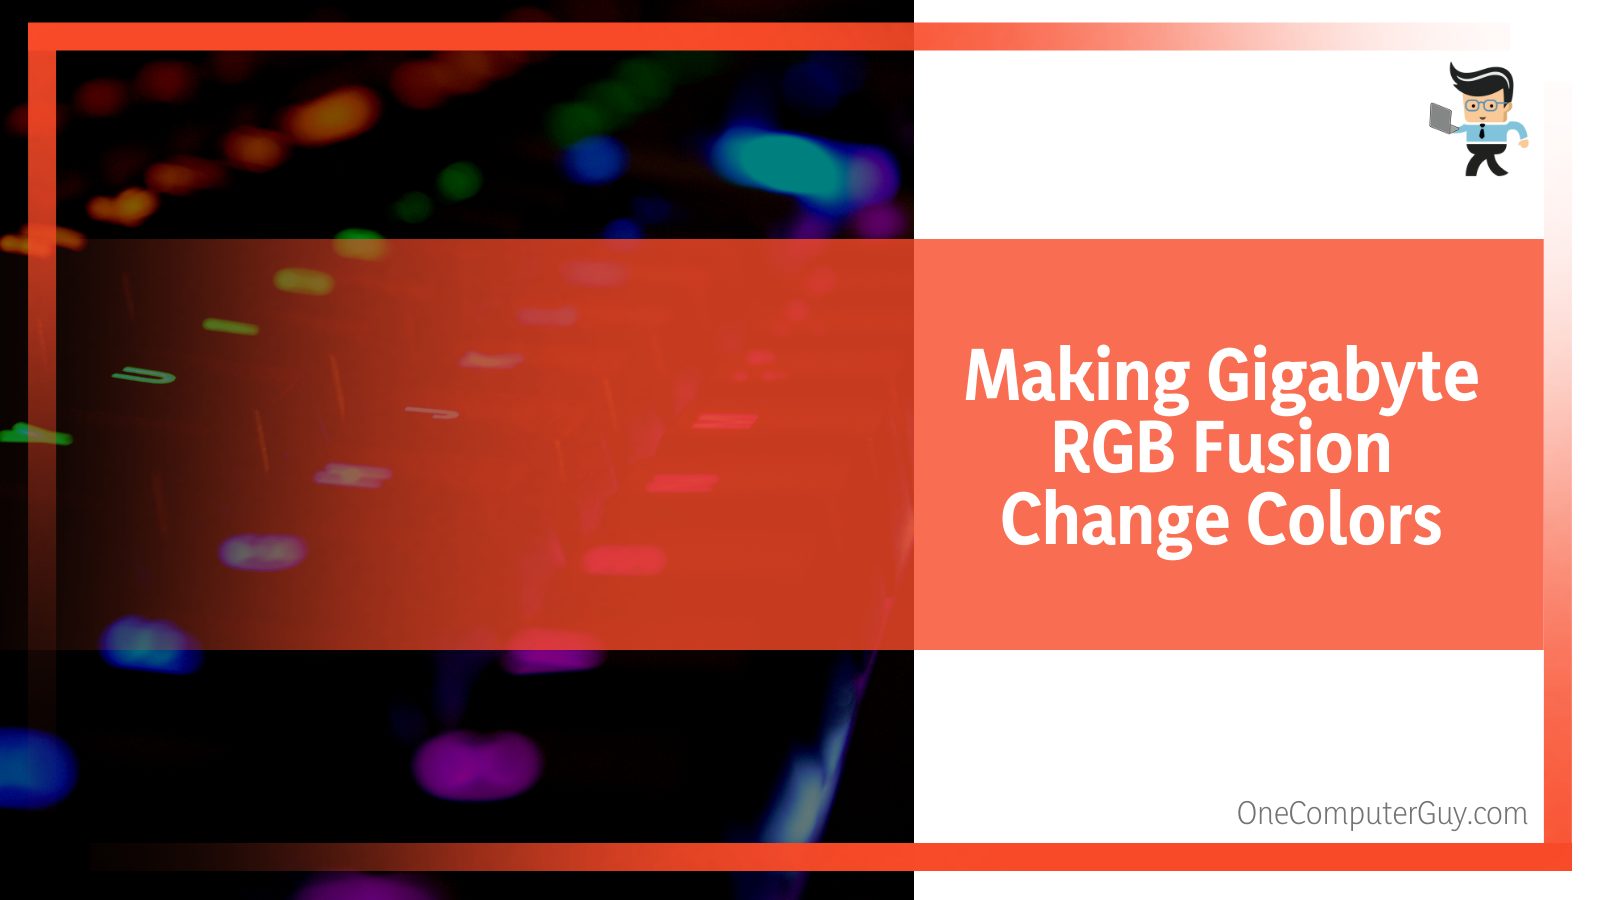 Making Gigabyte RGB Fusion Change Colors